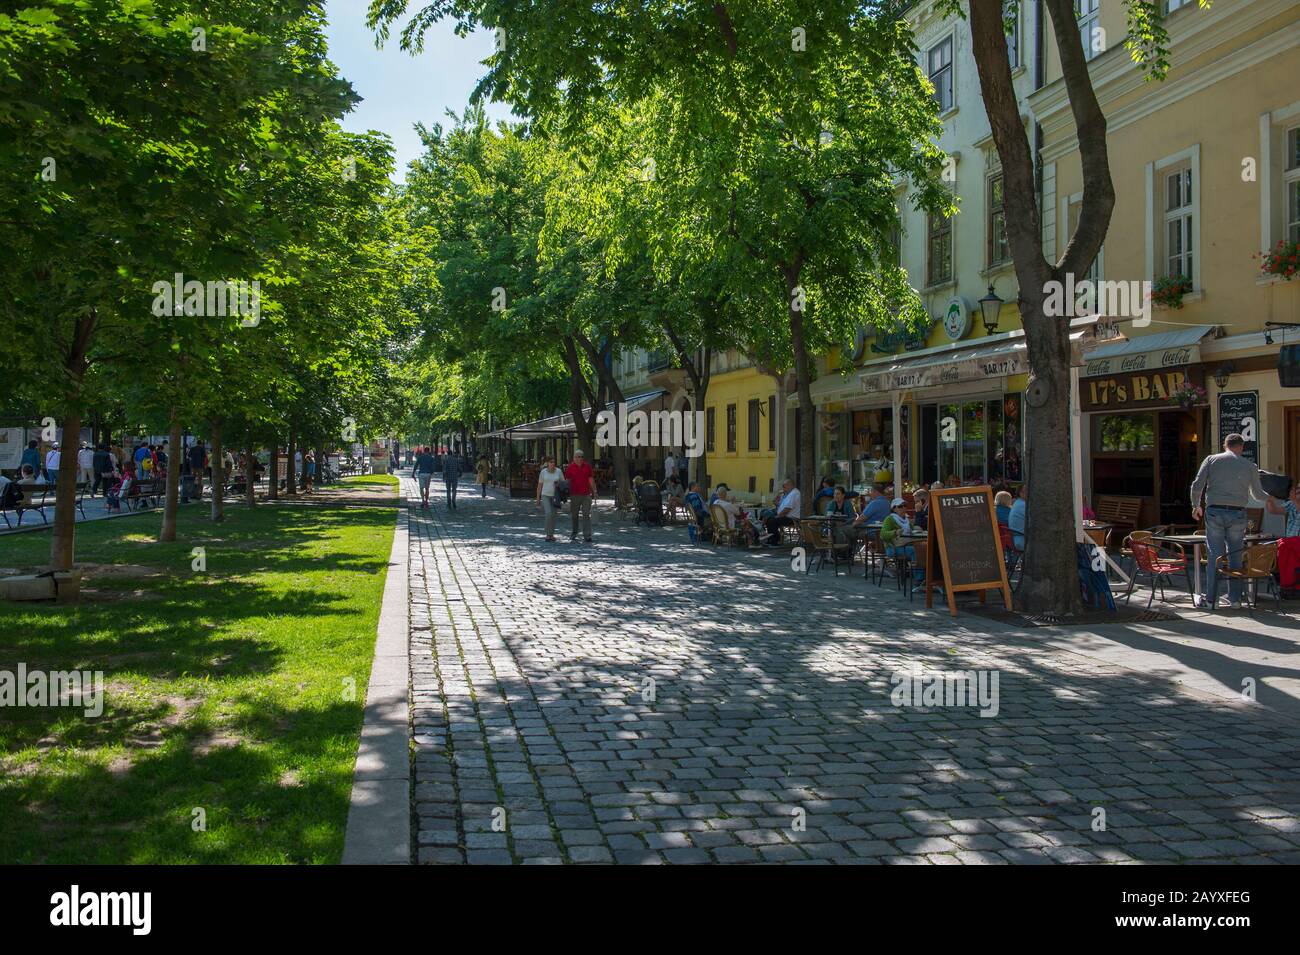 Street scene with people in sidewalk restaurants in Bratislava, the capital of Slovakia. Stock Photo